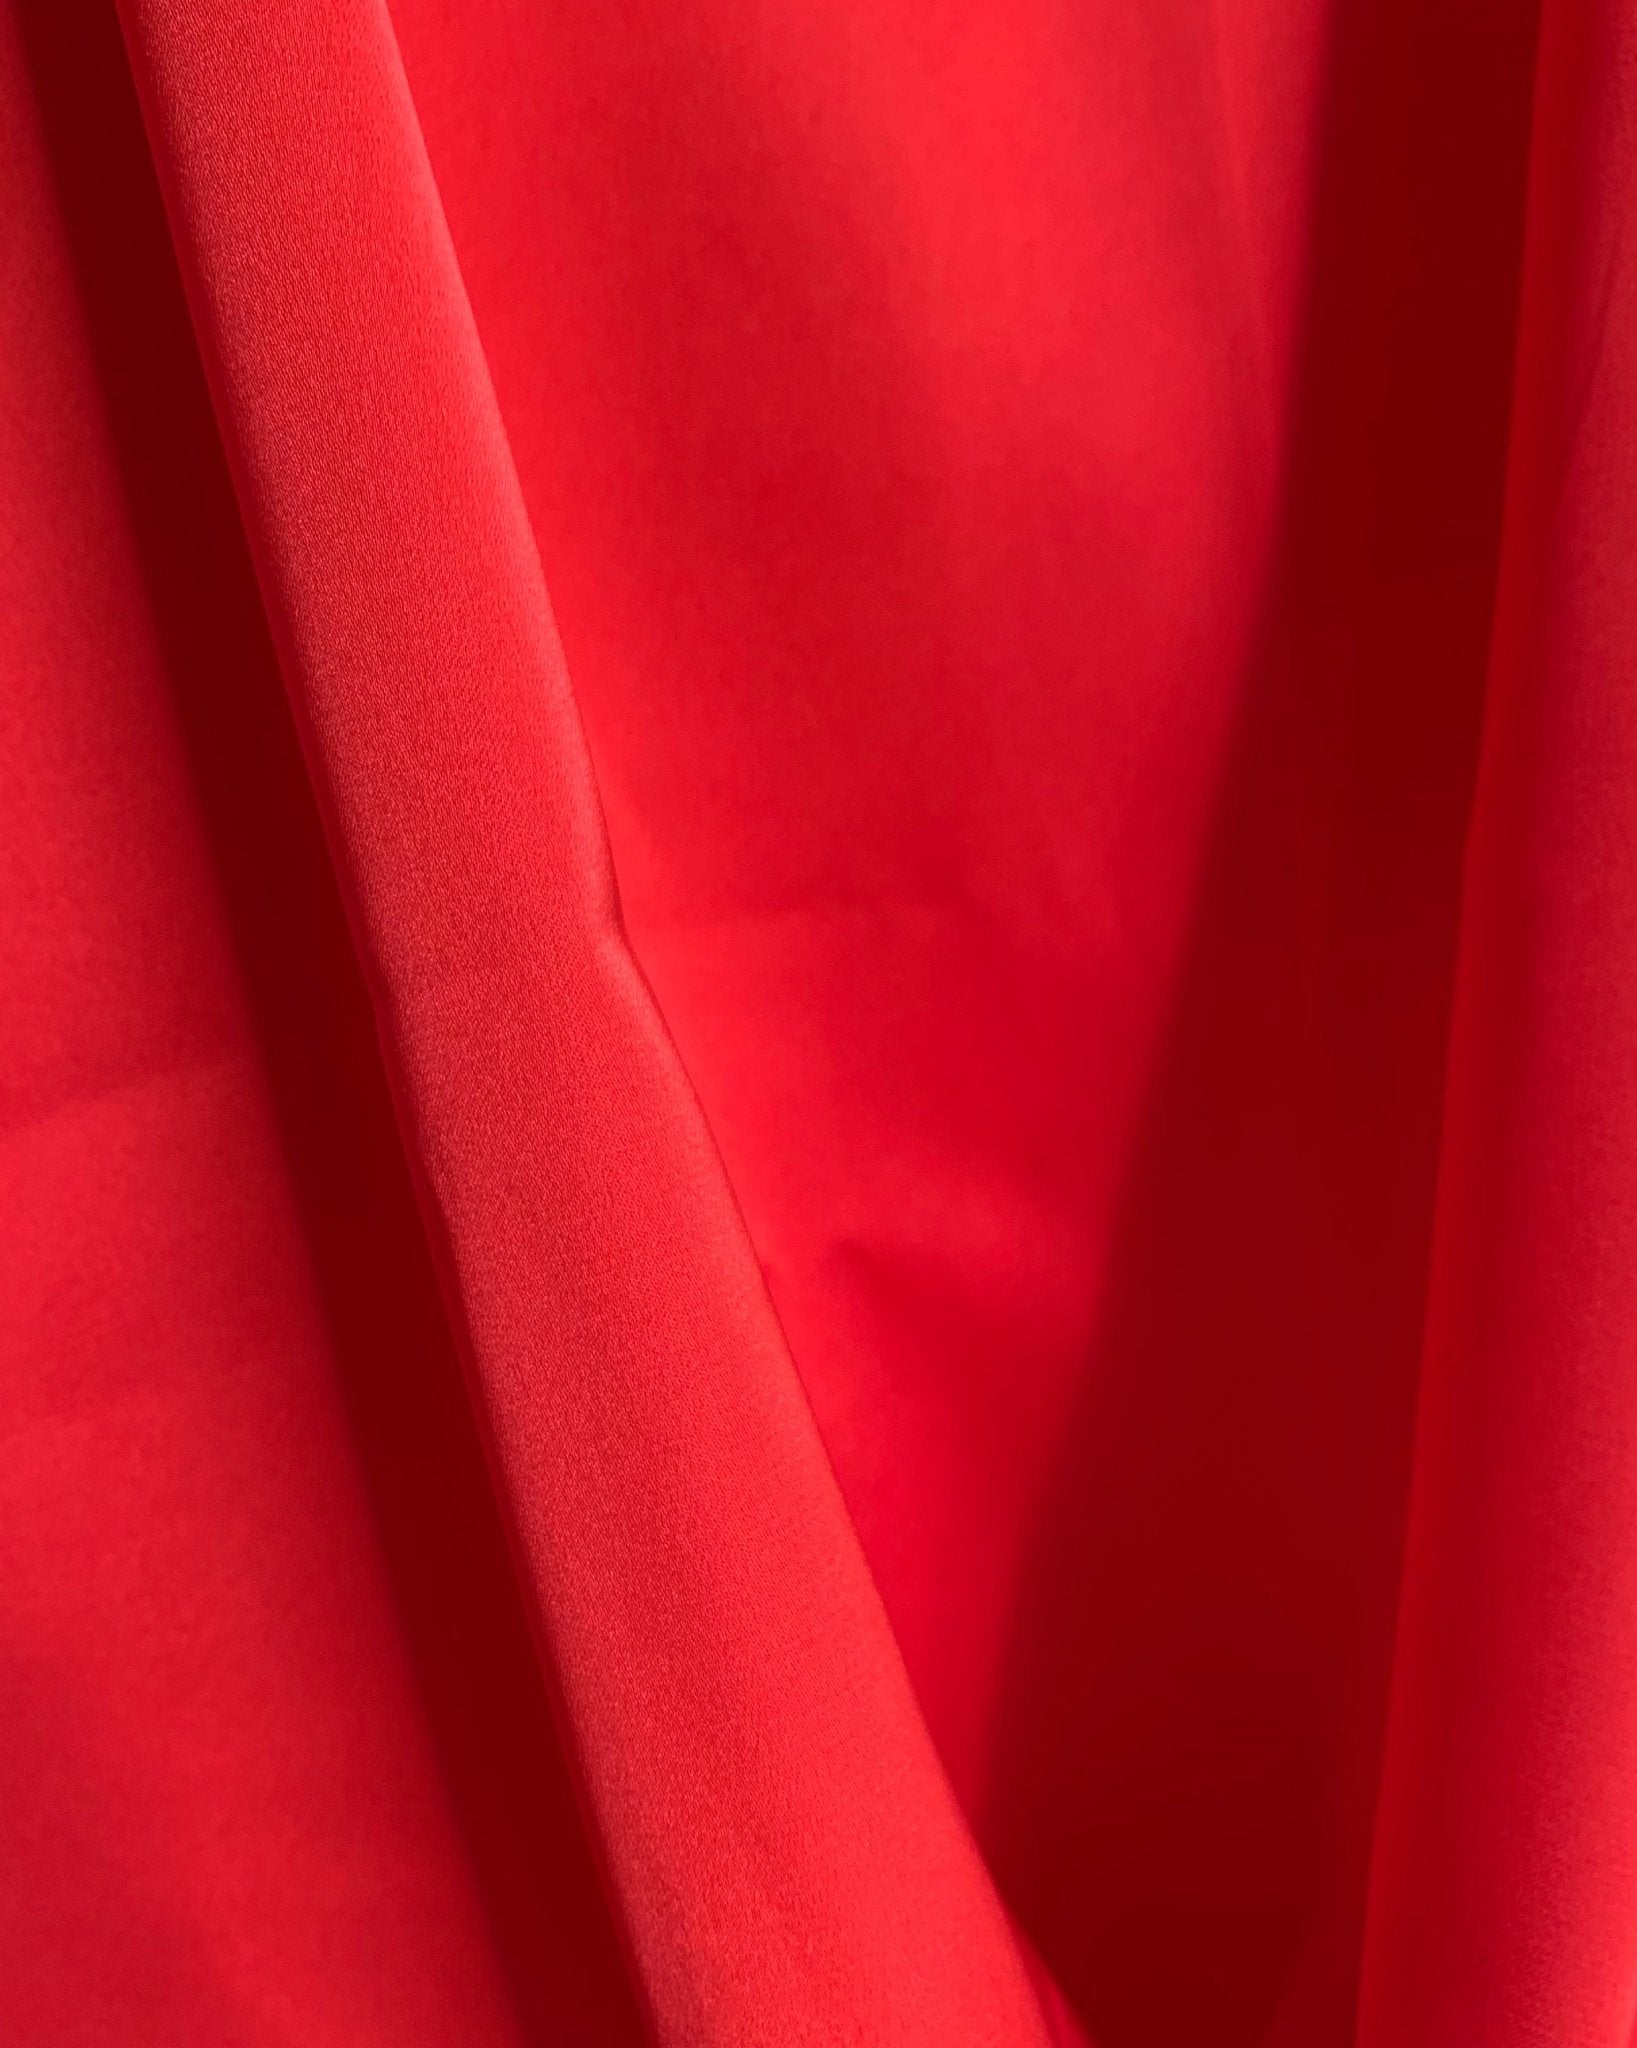 Red Satin Silk Kurta Set at Kamakhyaa by Mayura Kumar. This item is Ajrakh Heritage, Casual Wear, Dresses, Festive Wear, Kaftans, Mayura Kumar, Modal Silk, Relaxed Fit, Solids, Womenswear